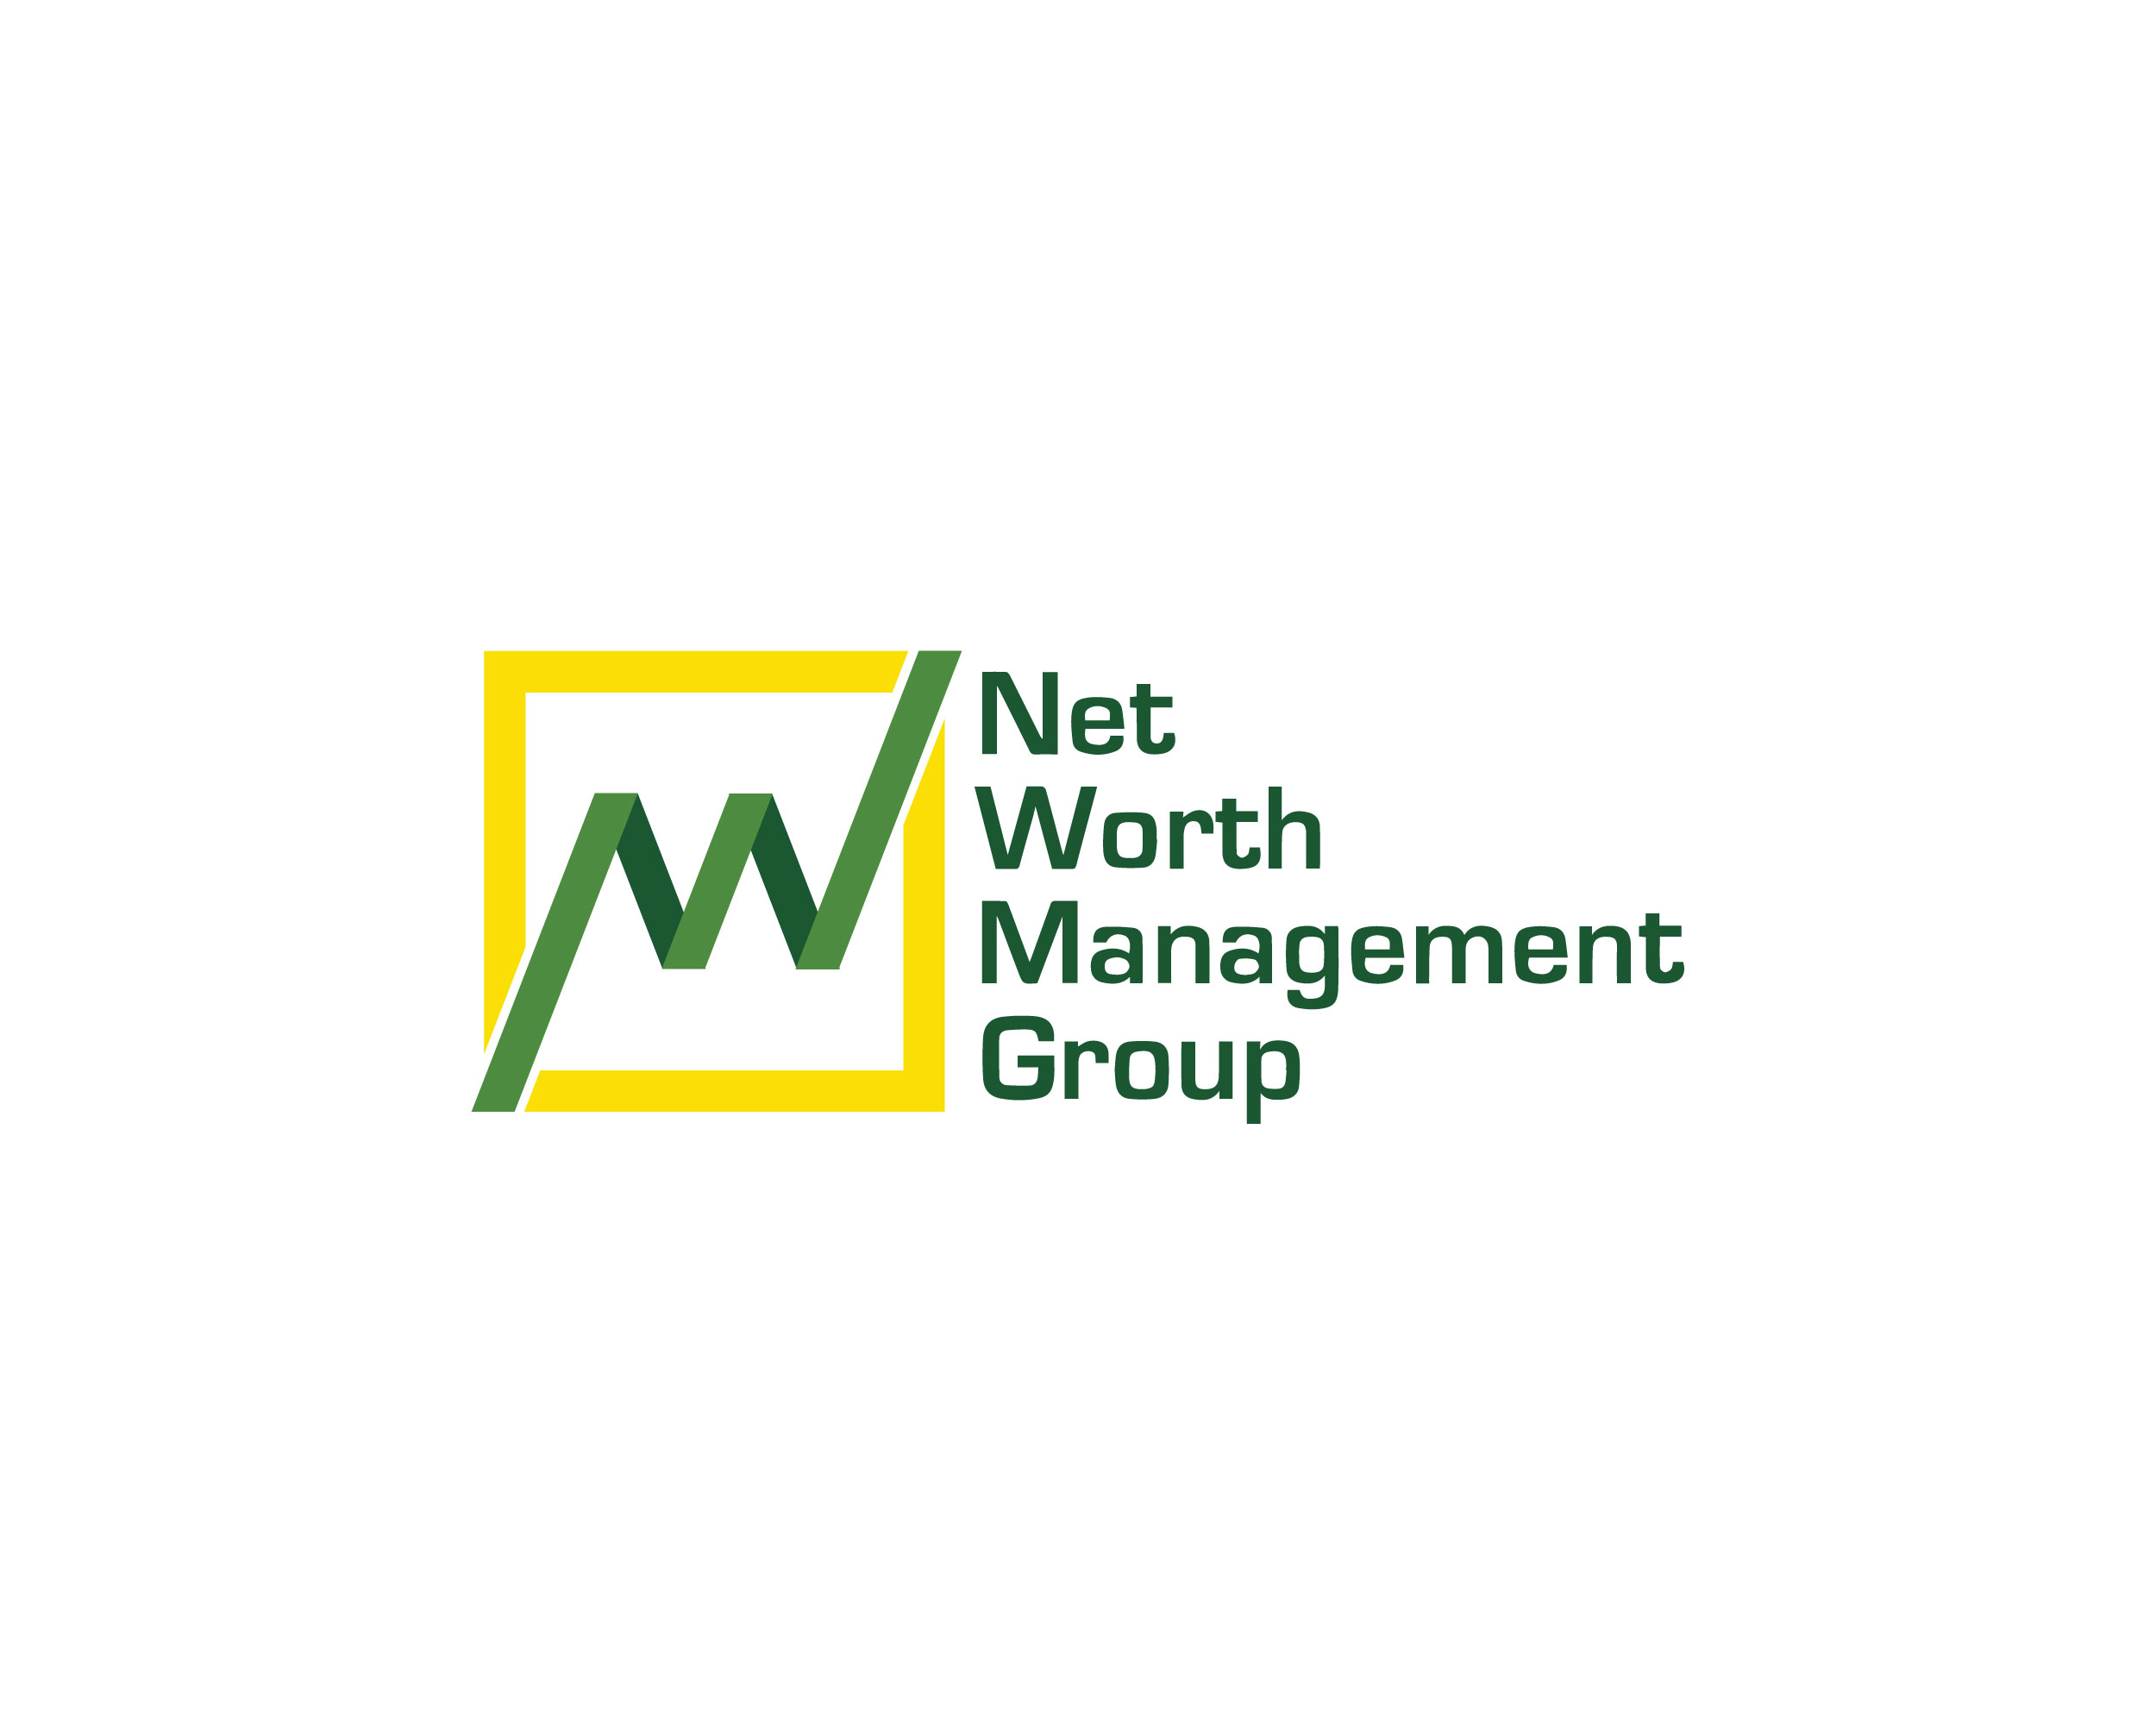 Net Worth Management Group